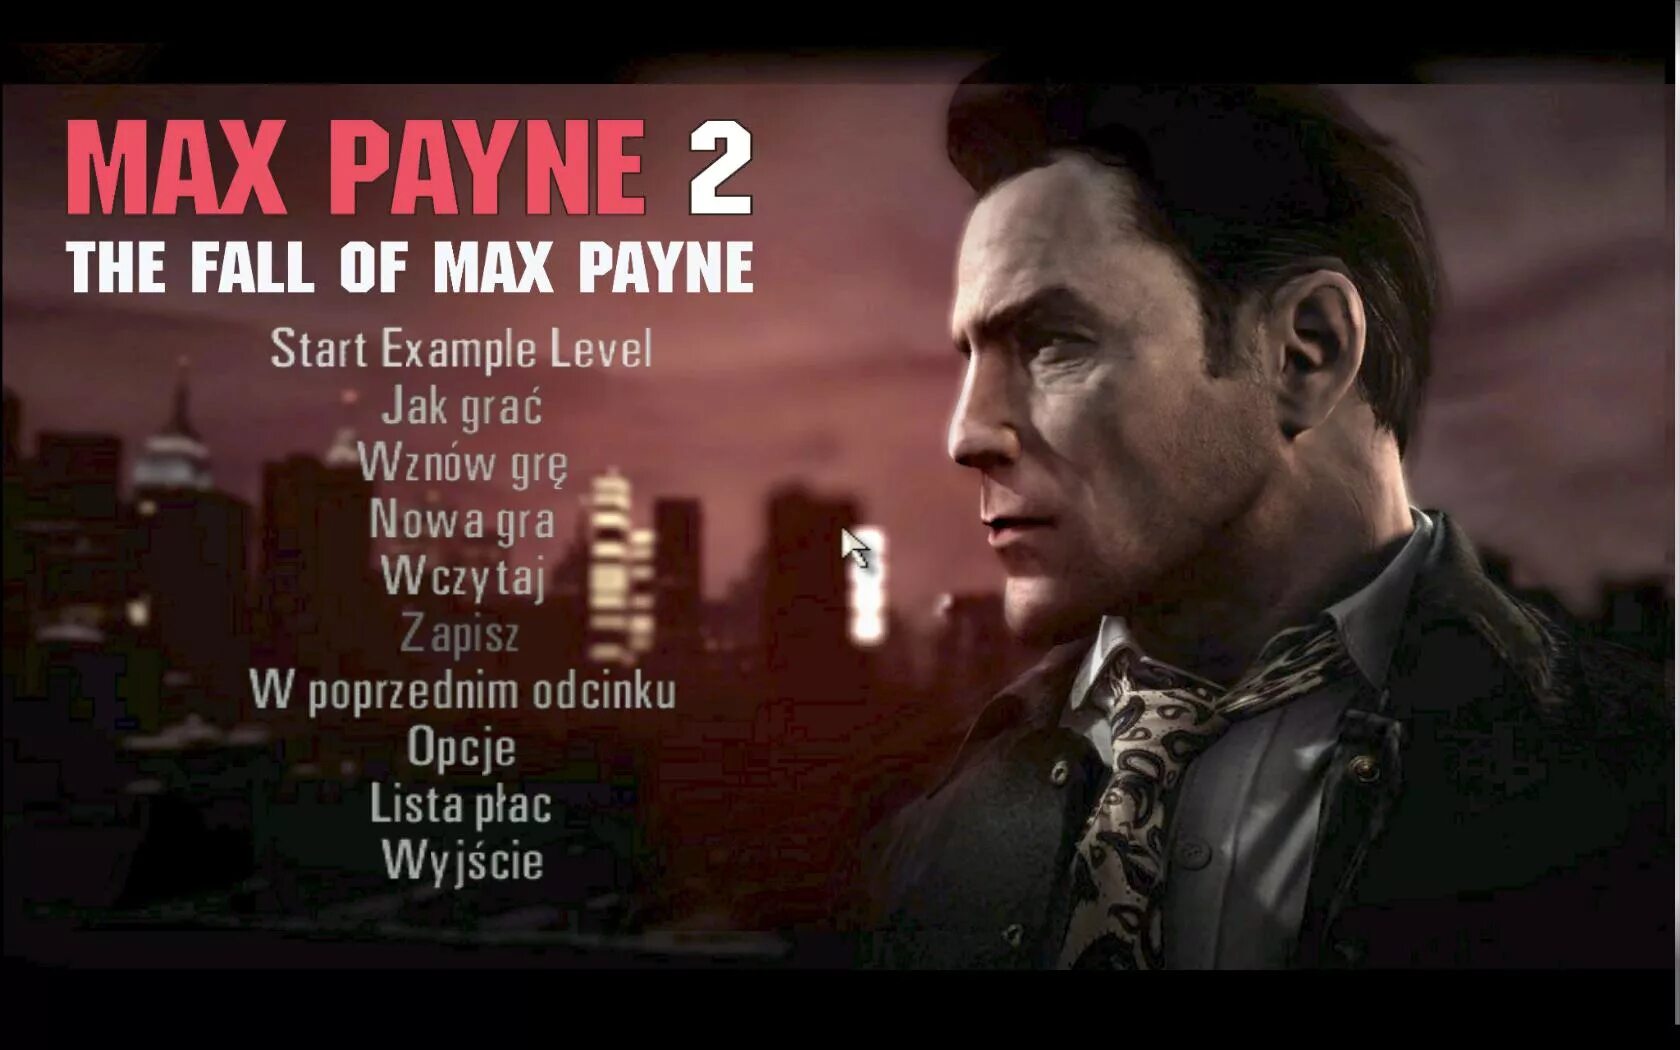 Max Payne 3 меню. Max Payne 1 меню. Max Payne 1 main menu. Меню игры Макс Пейн 3.